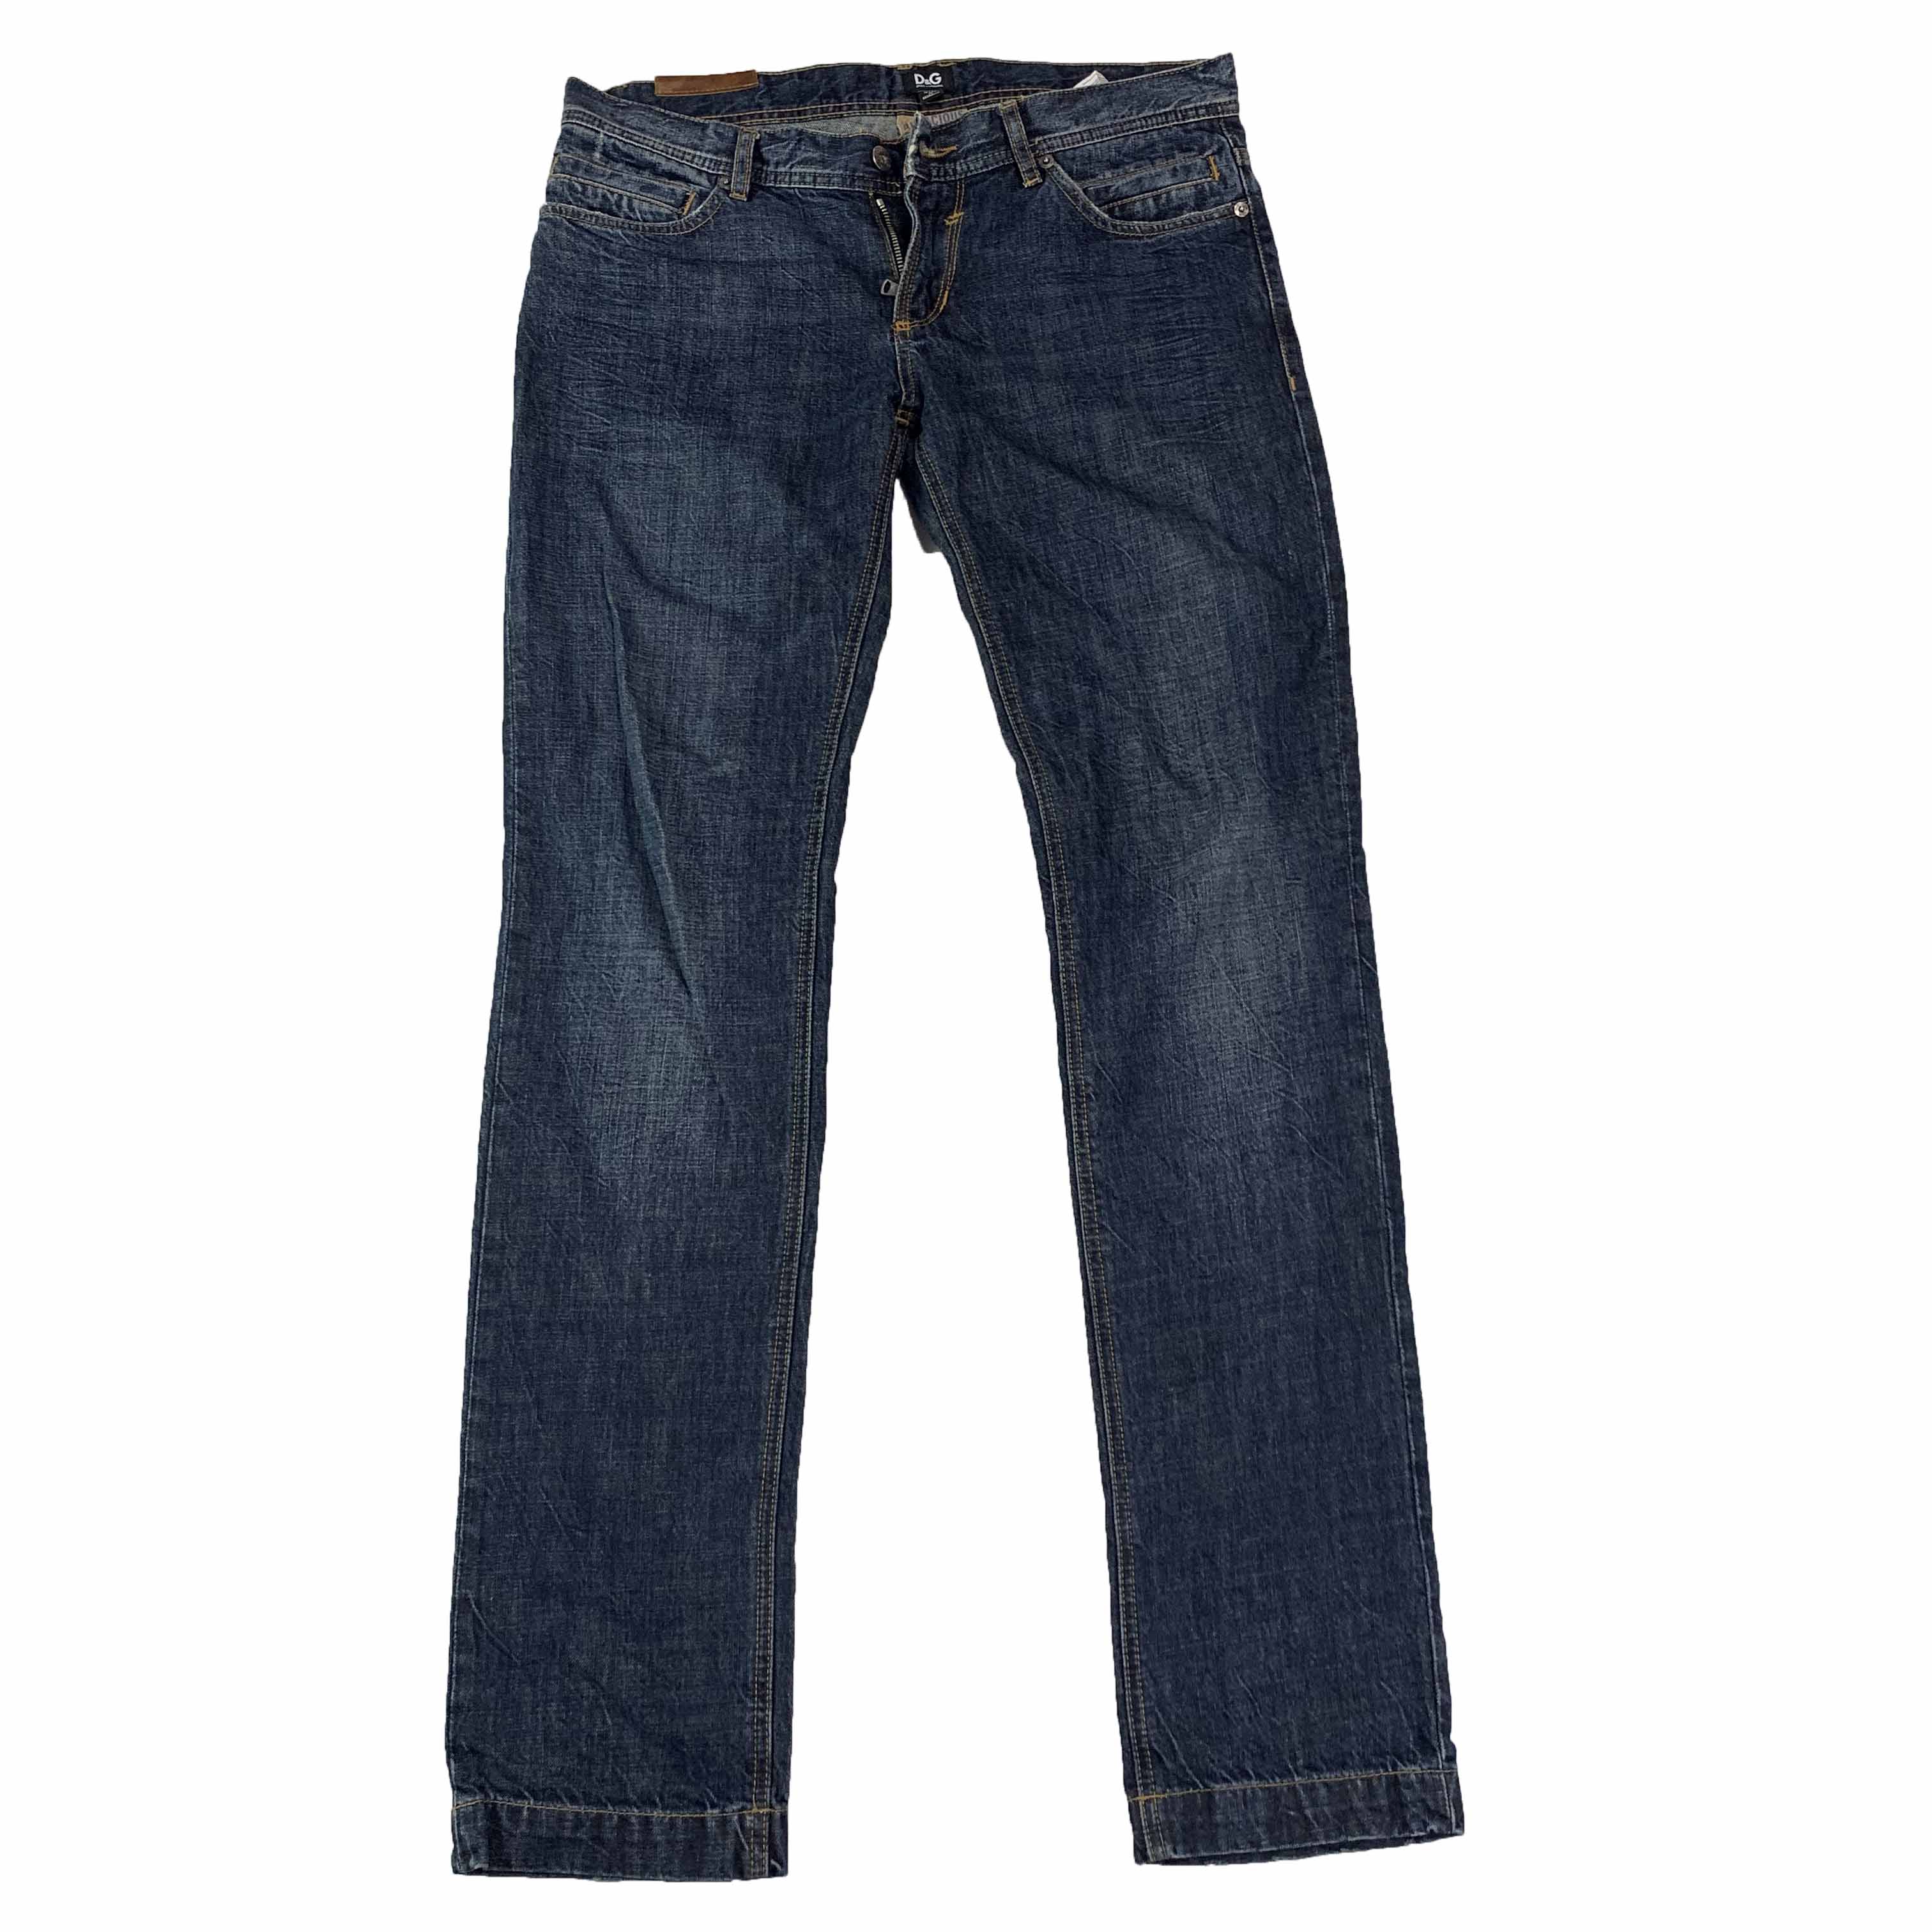 [D&amp;G] Dark Blue Jeans - Size 32